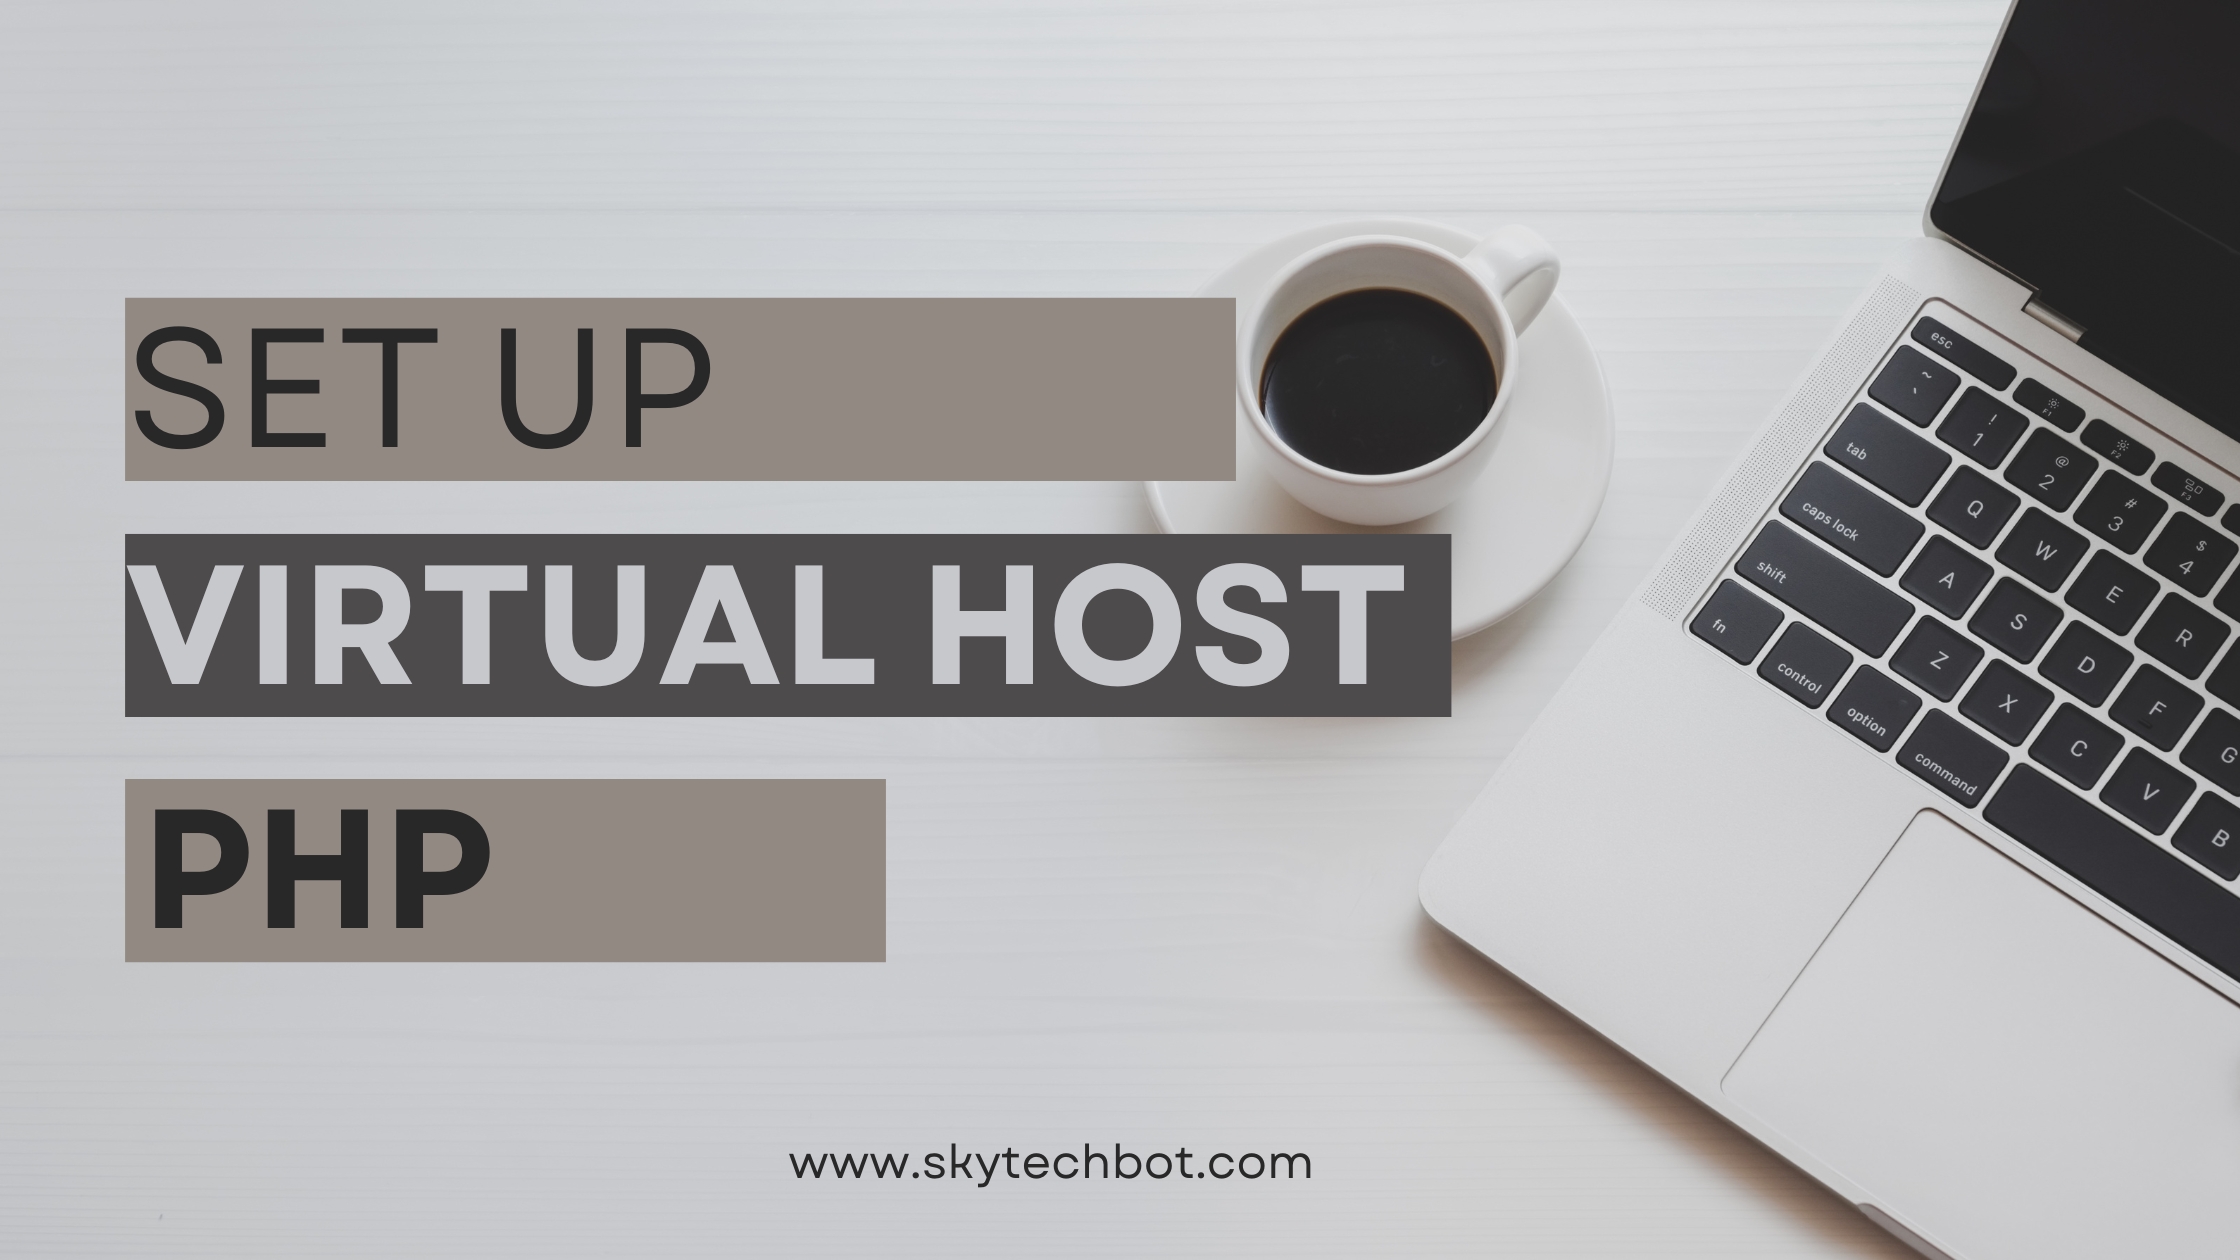 How to setup virtual host on Xampp